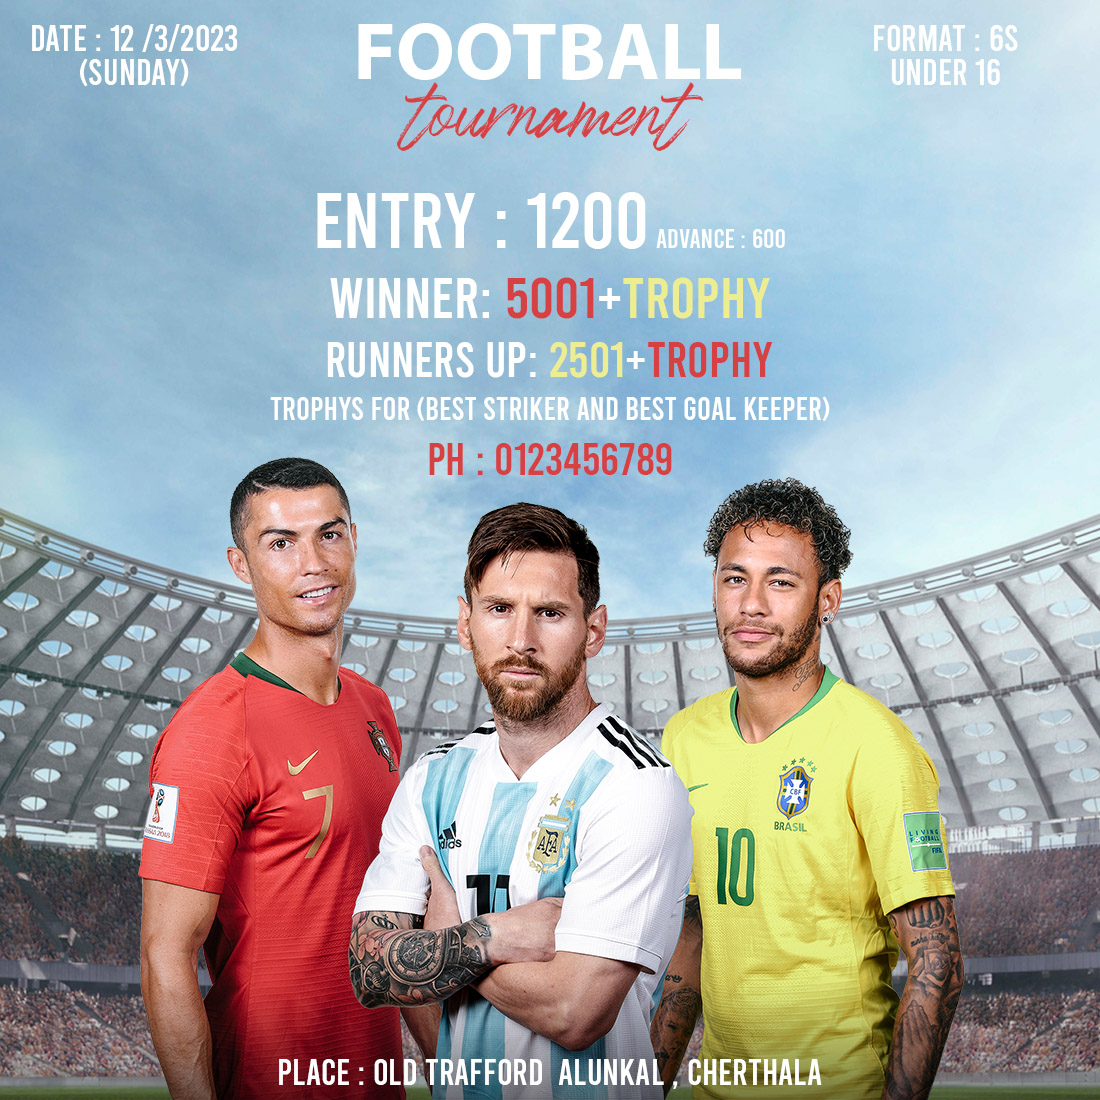 Football Tournament High Resolution Socialmedia Template cover image.